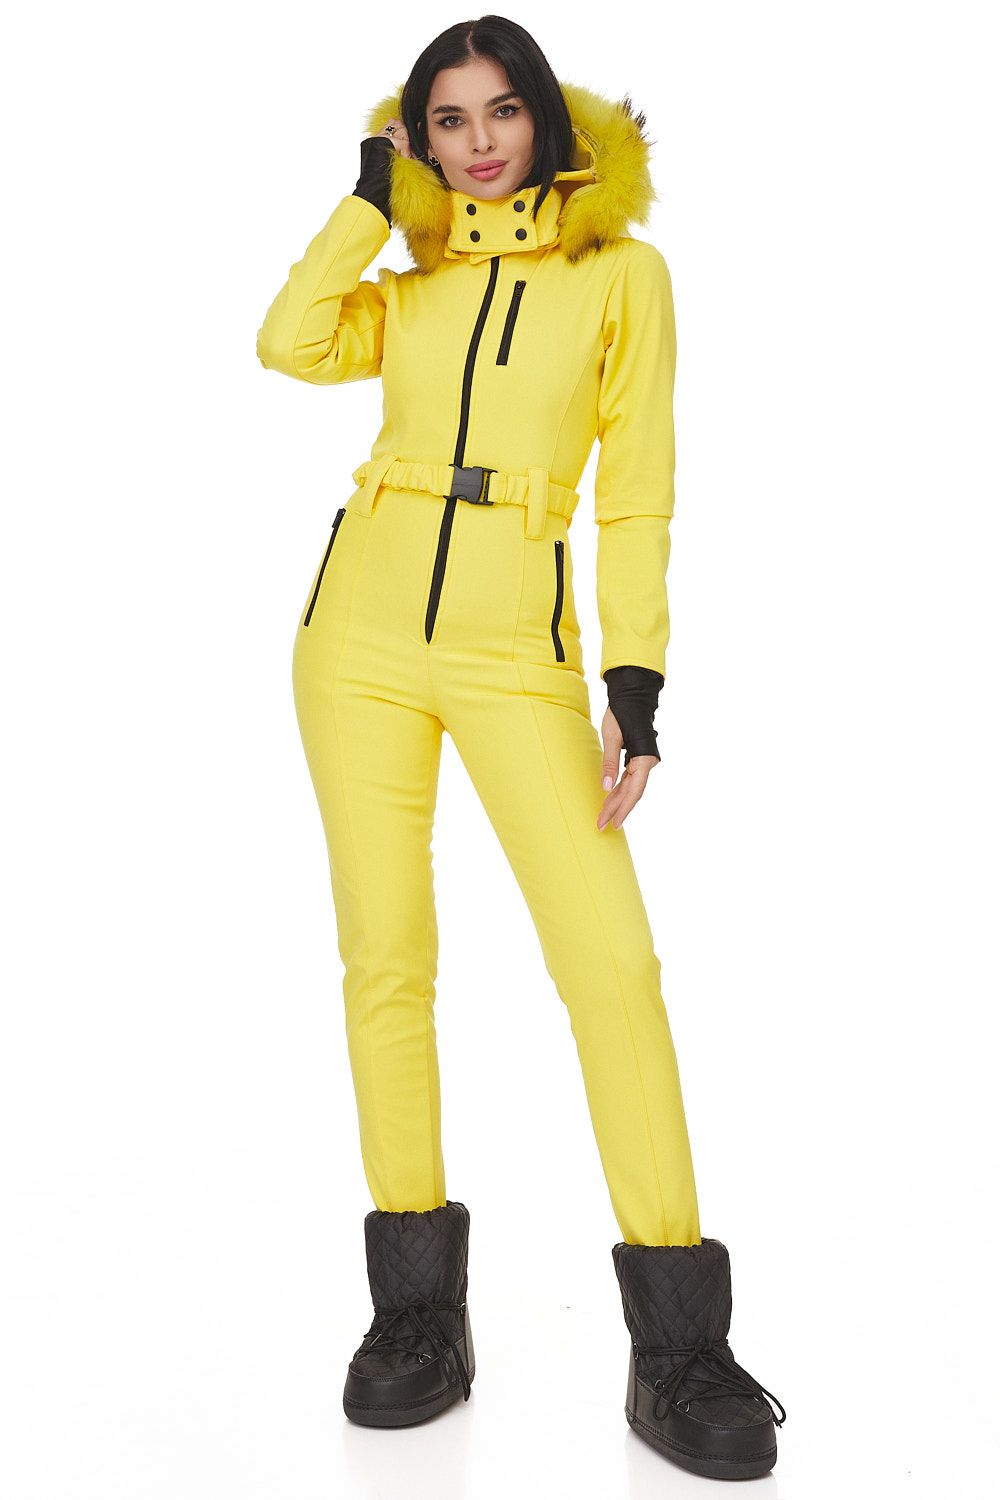 Paulis Bogas yellow casual ski overalls